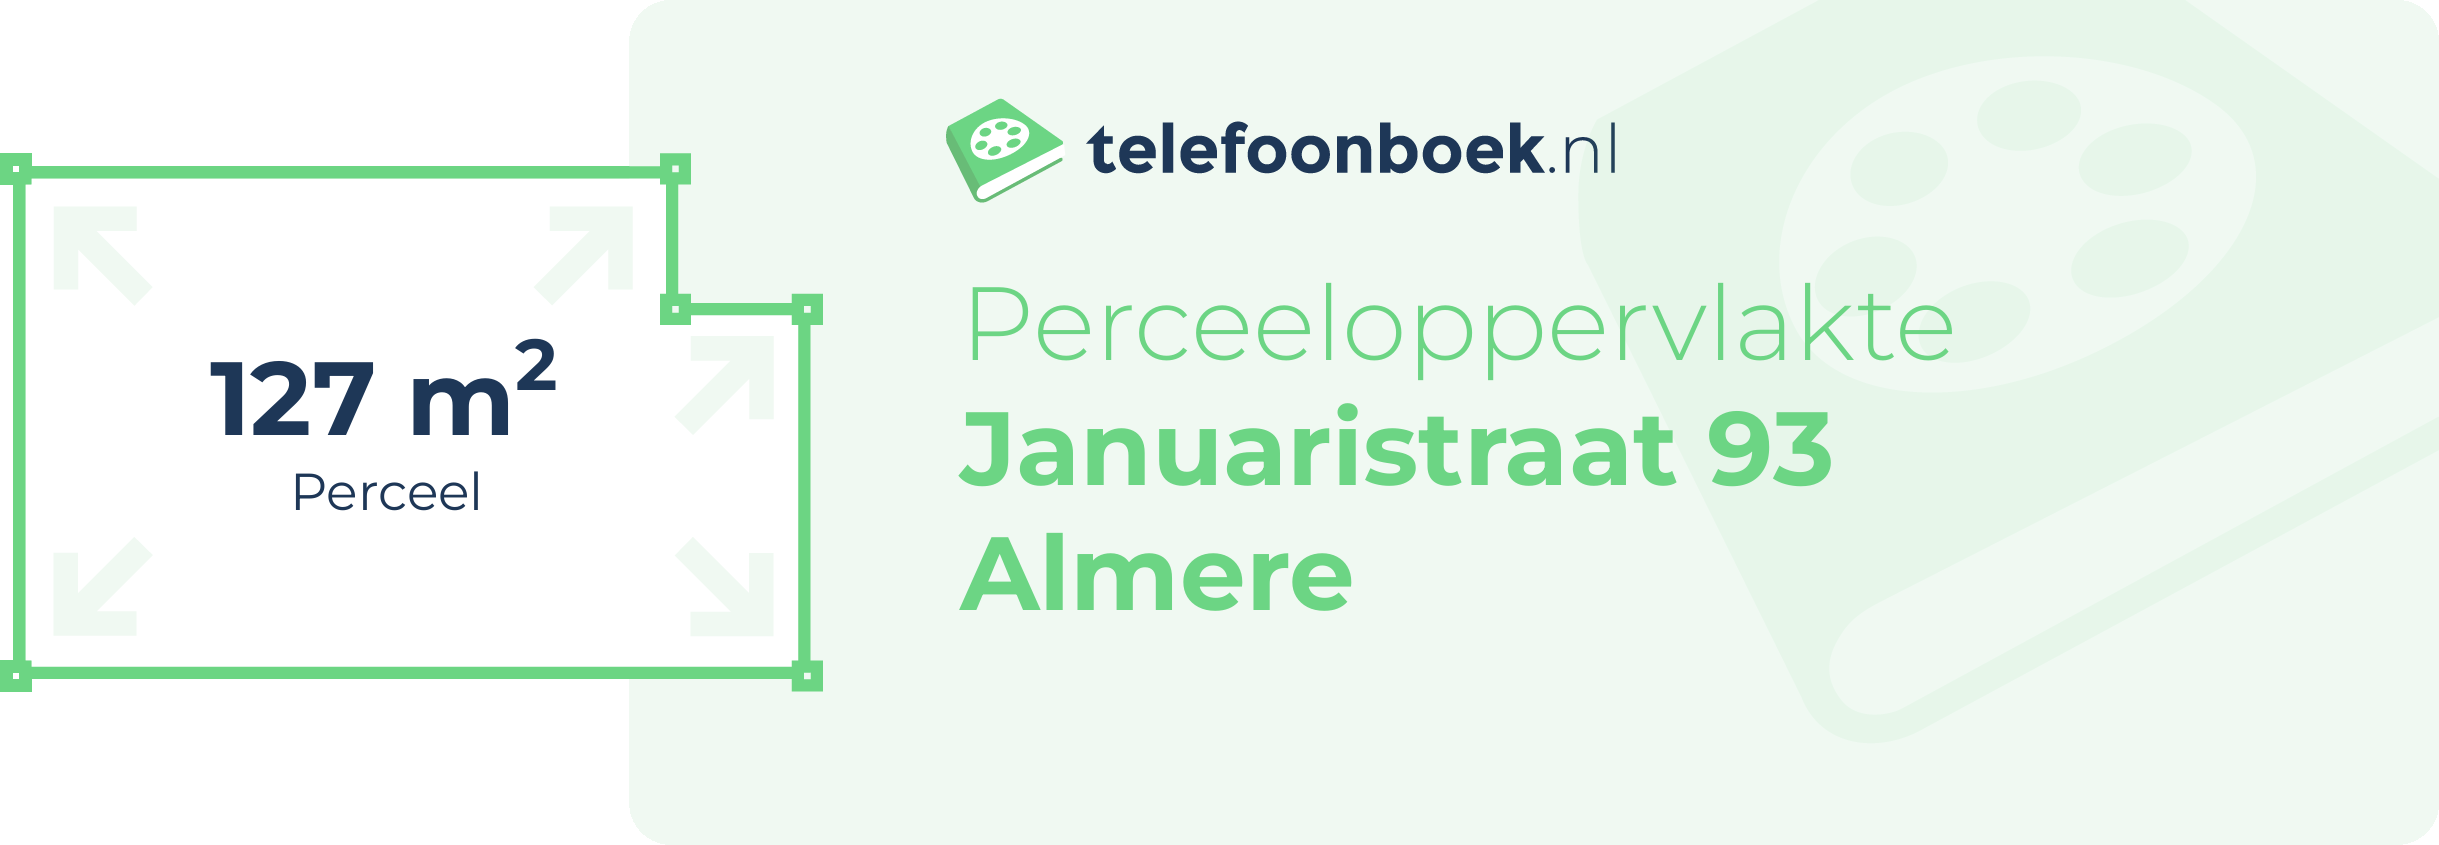 Perceeloppervlakte Januaristraat 93 Almere